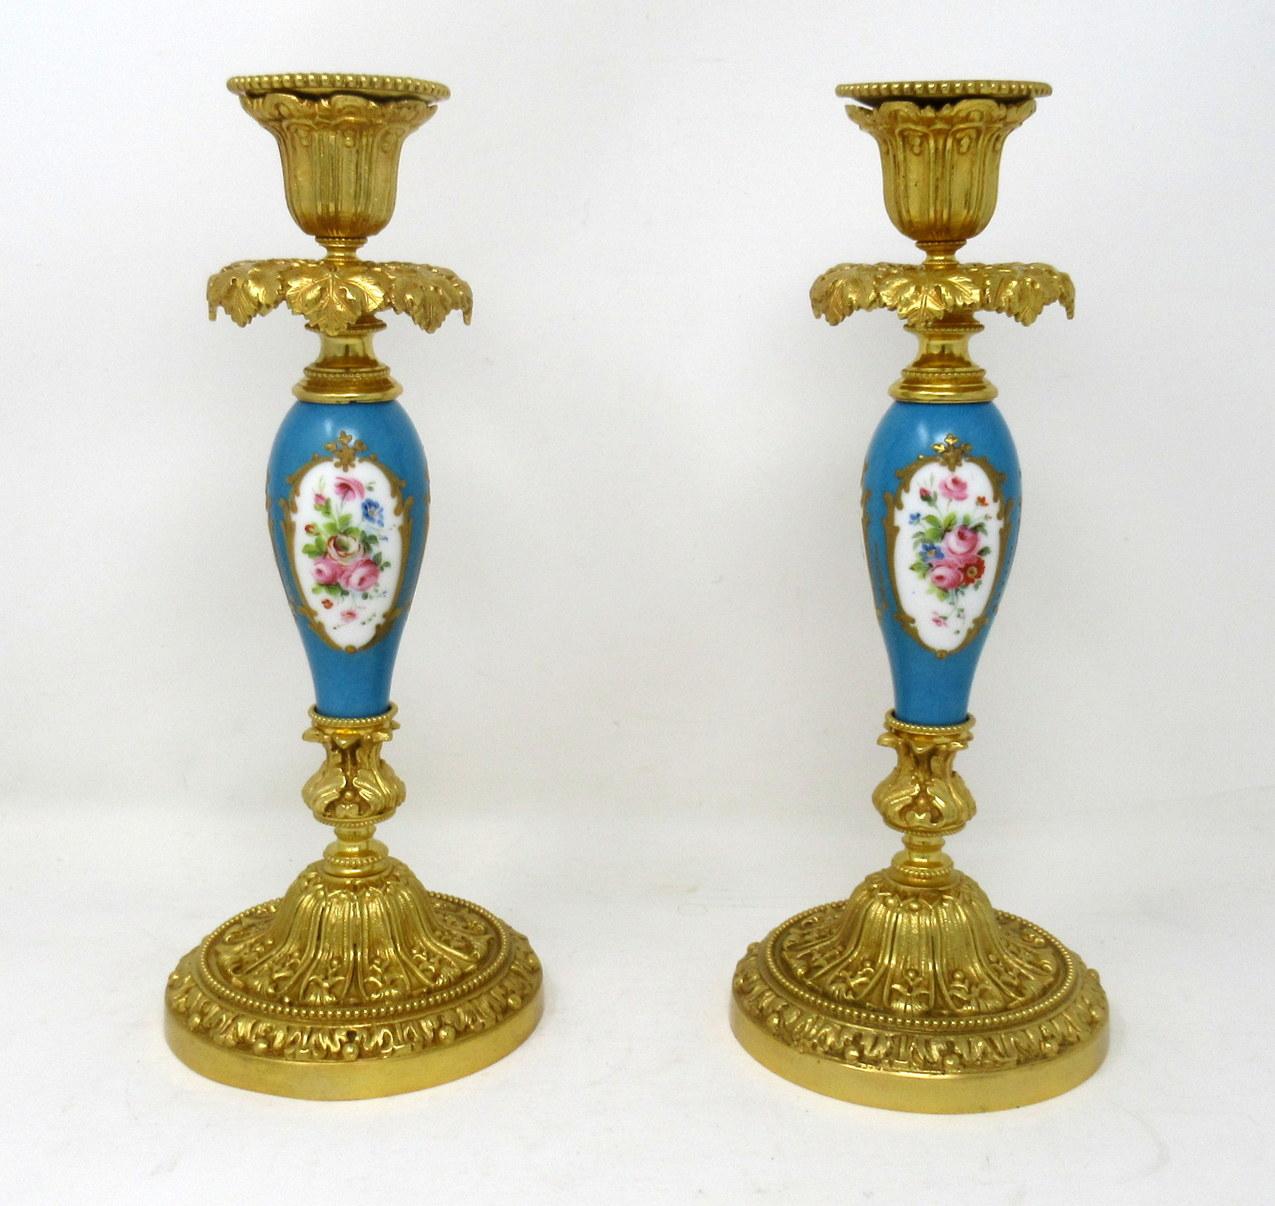 Regency Antique Pair of Ormolu Sevres Porcelain Gilt Bronze Candlesticks Candelabra